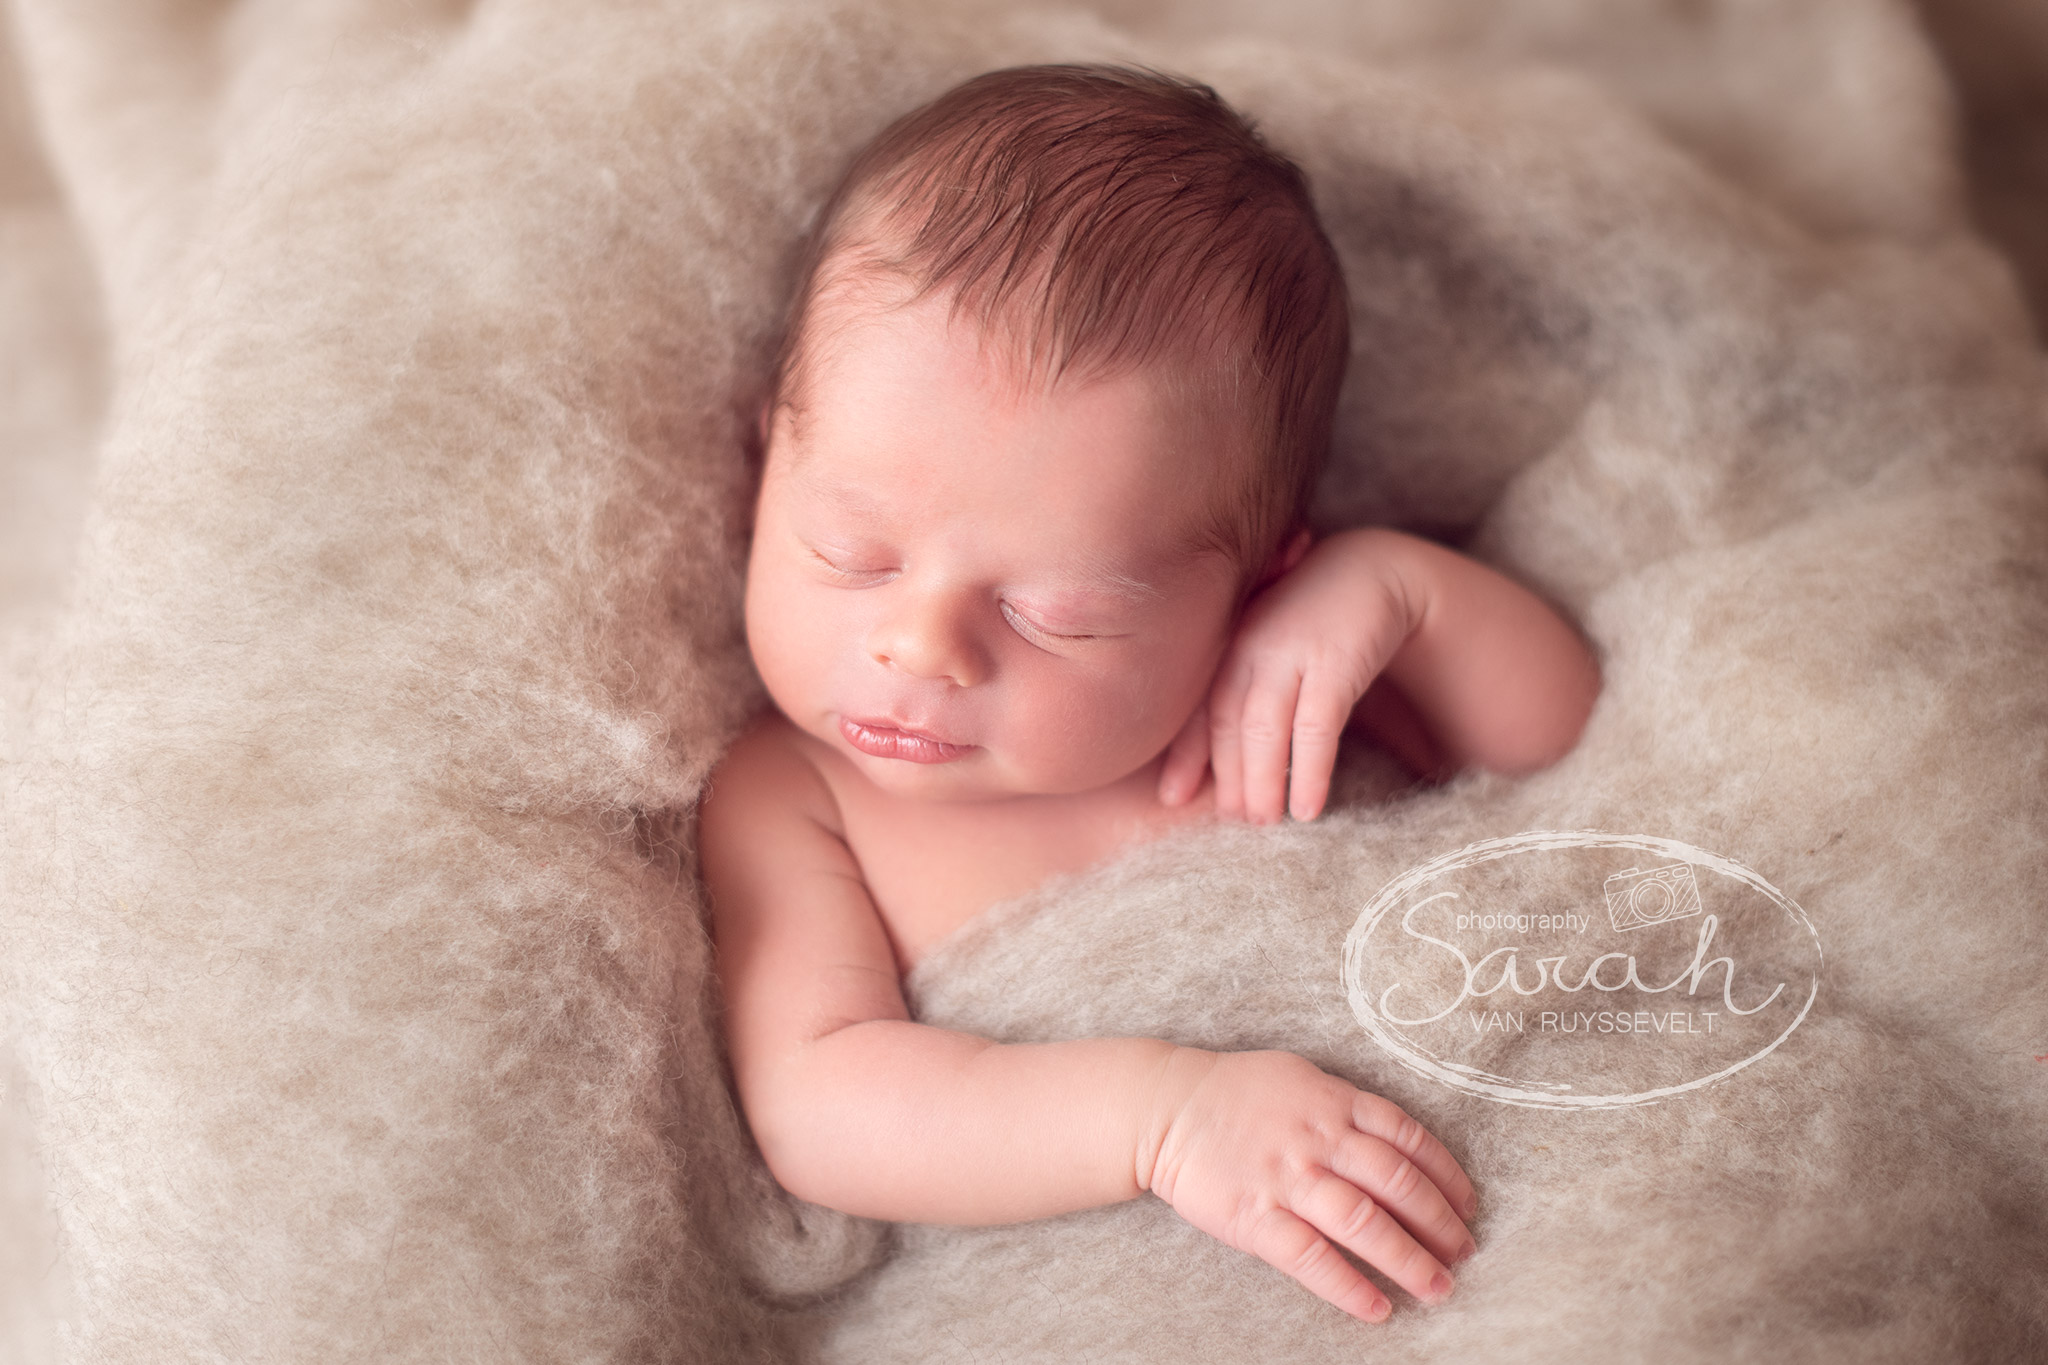 Sarah Van Ruyssevelt Photography, newborn